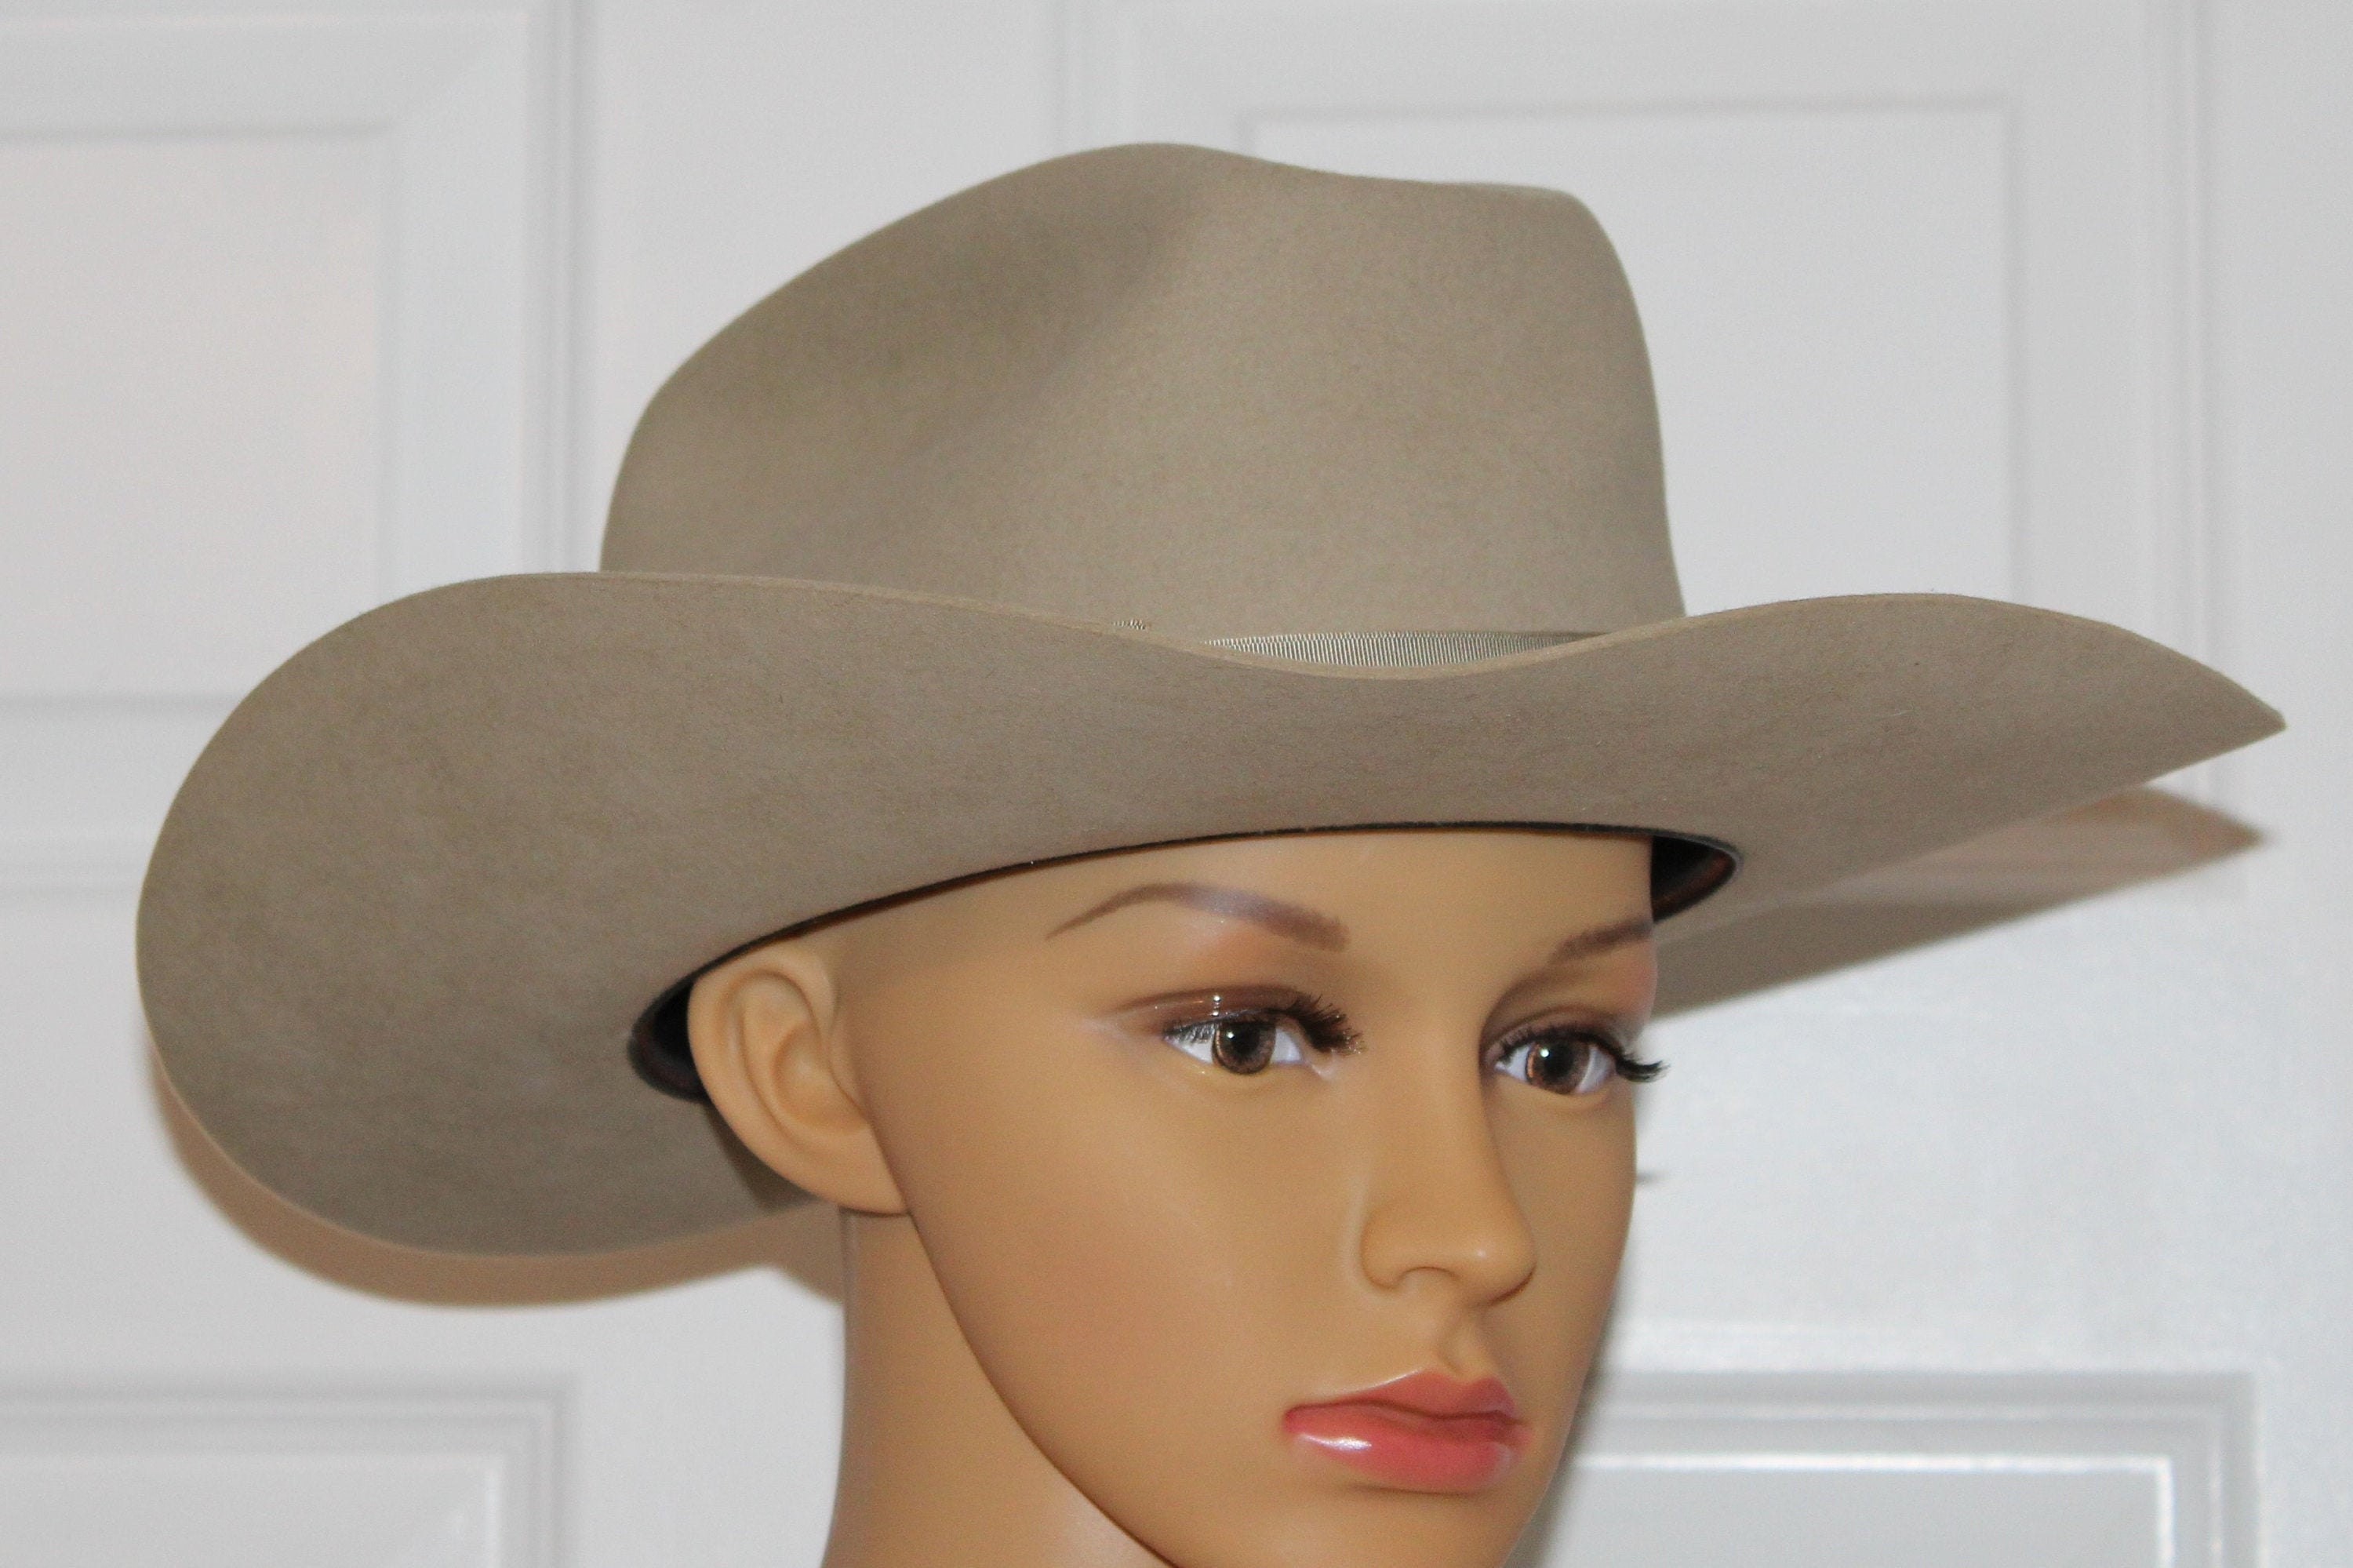 Brown Cattleman Cowboy Hat for Men Women Felt Western Hat for Men